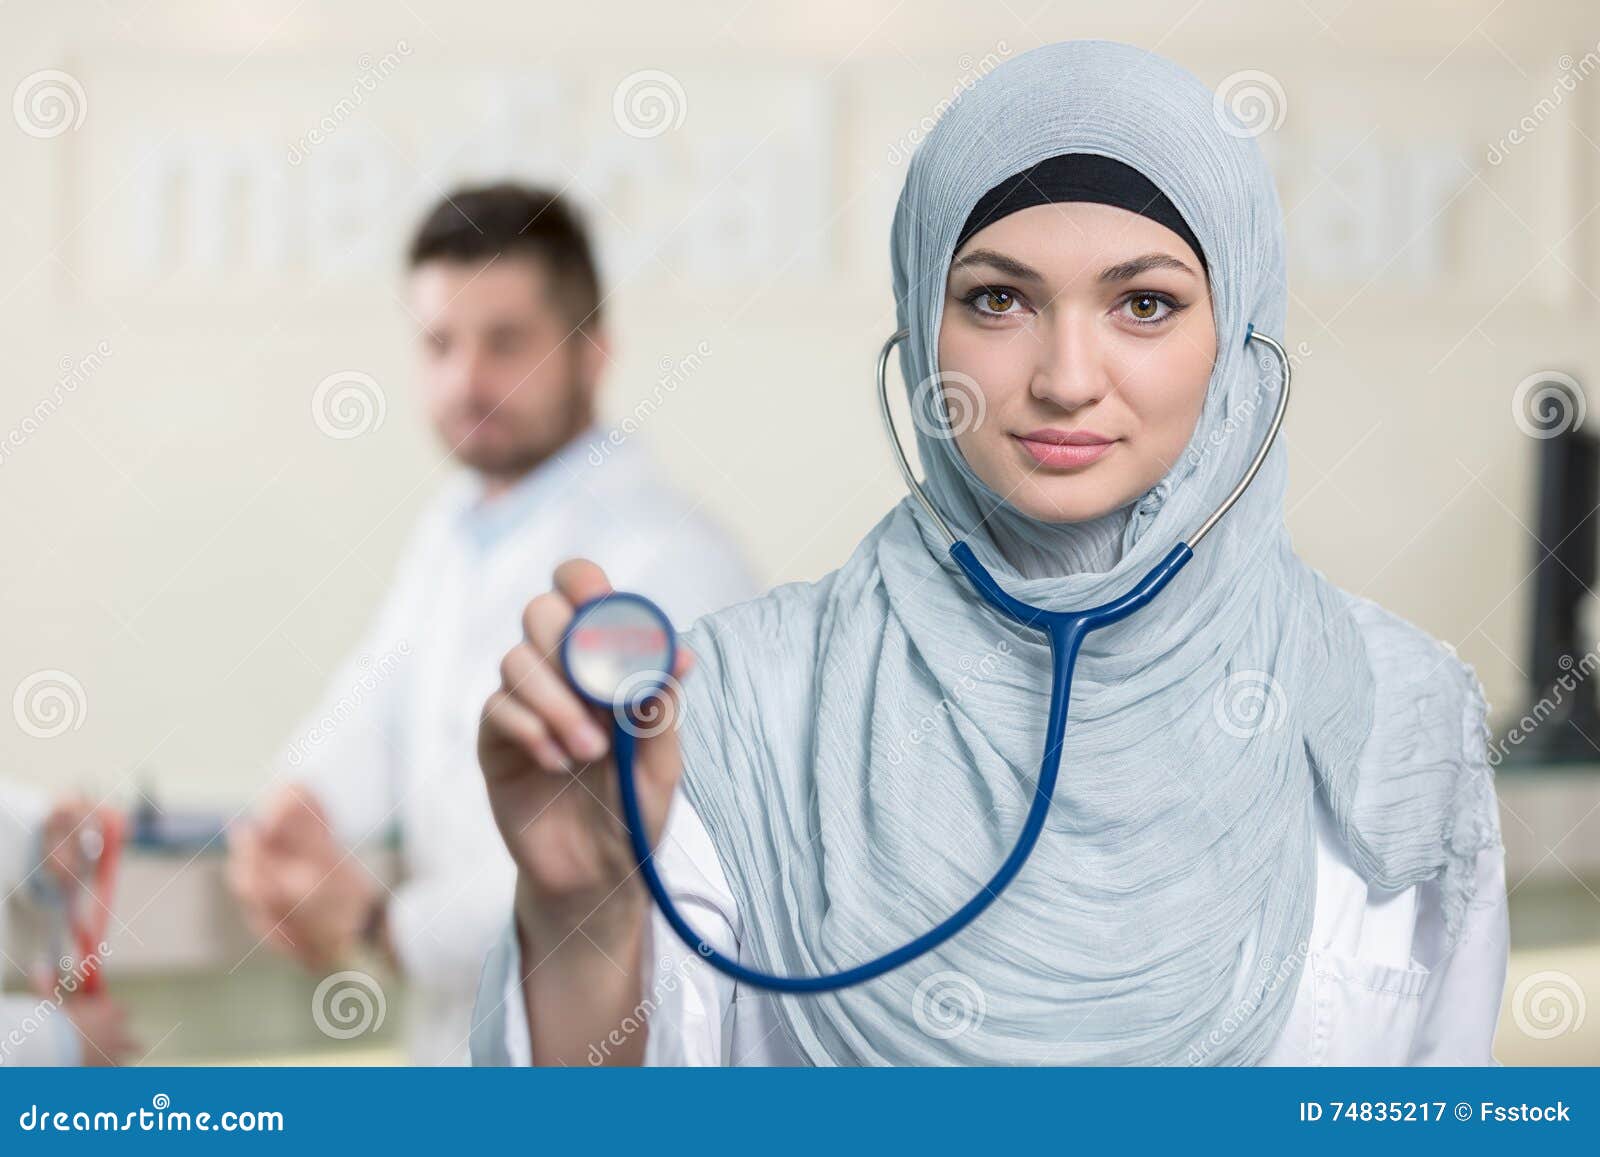 Врач мусульман. Мусульманки в медицине. Мусульманка врач. Арабский доктор женщина. Медики с платком.